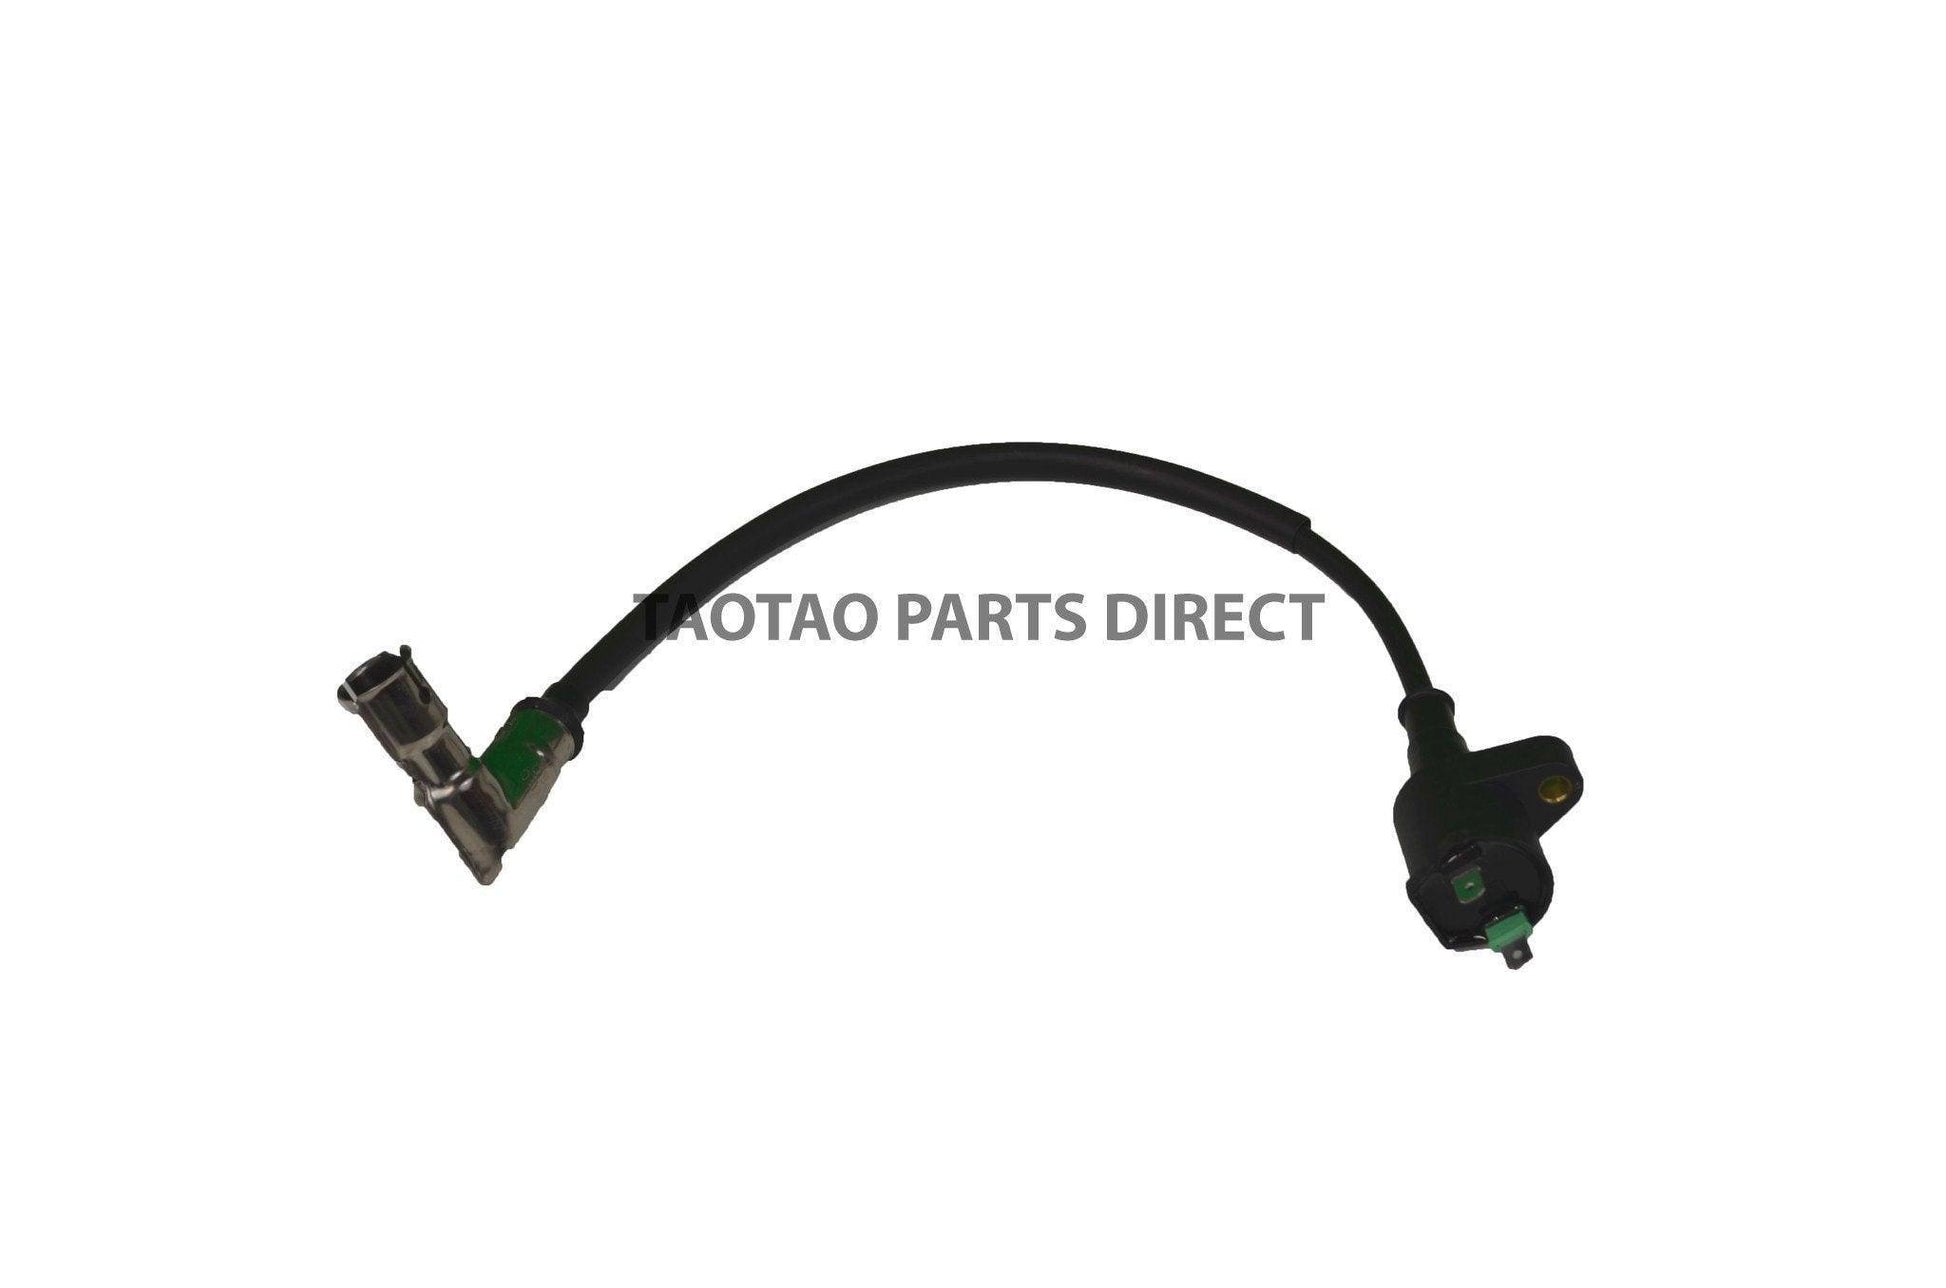 Ignition Coil For 110cc and 125cc ATV's - TaoTaoPartsDirect.com